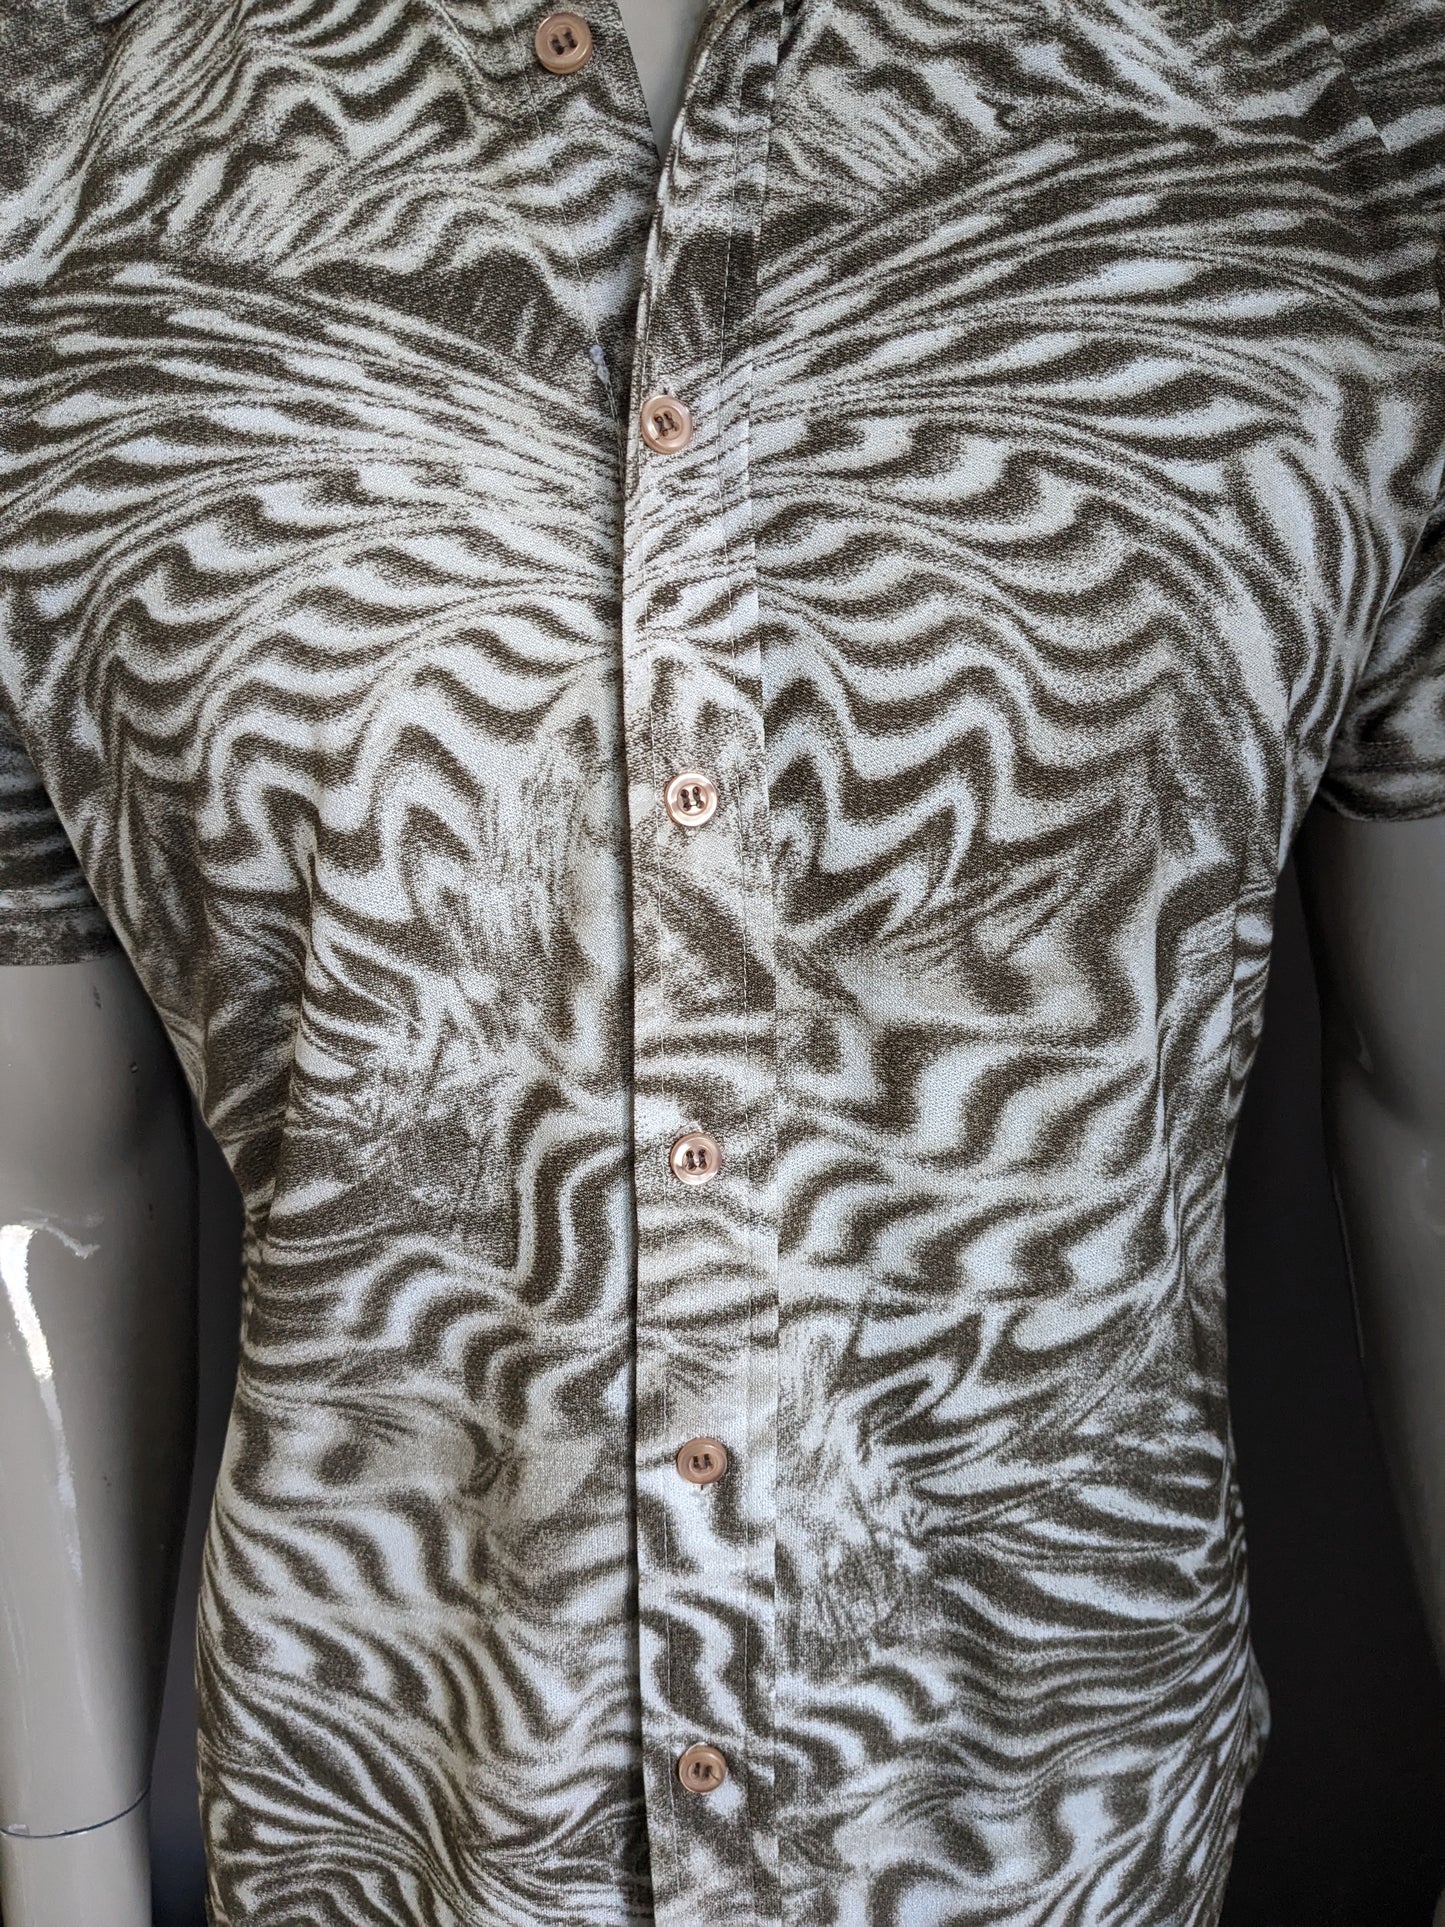 Vintage Marcellan Shirt short sleeve. Beige brown print. Size L. Stretch.